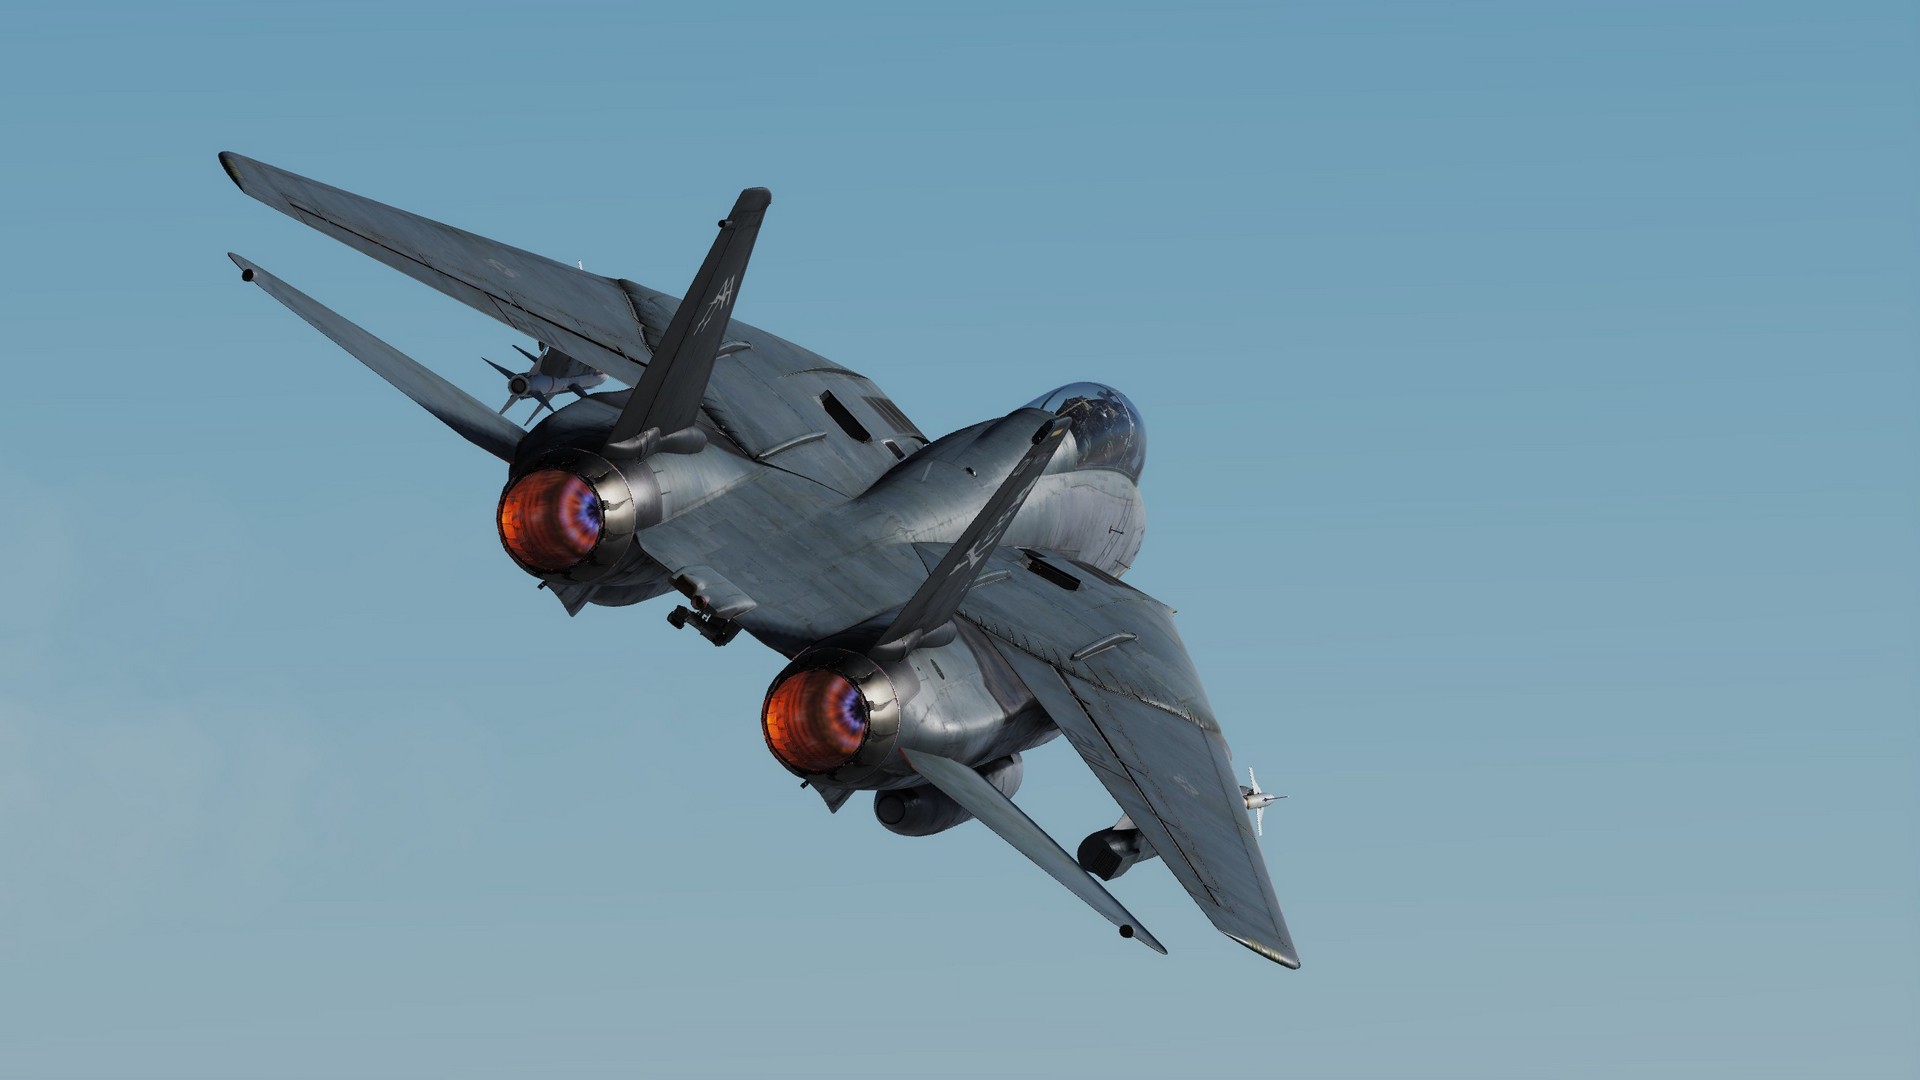 DCS World: F-14